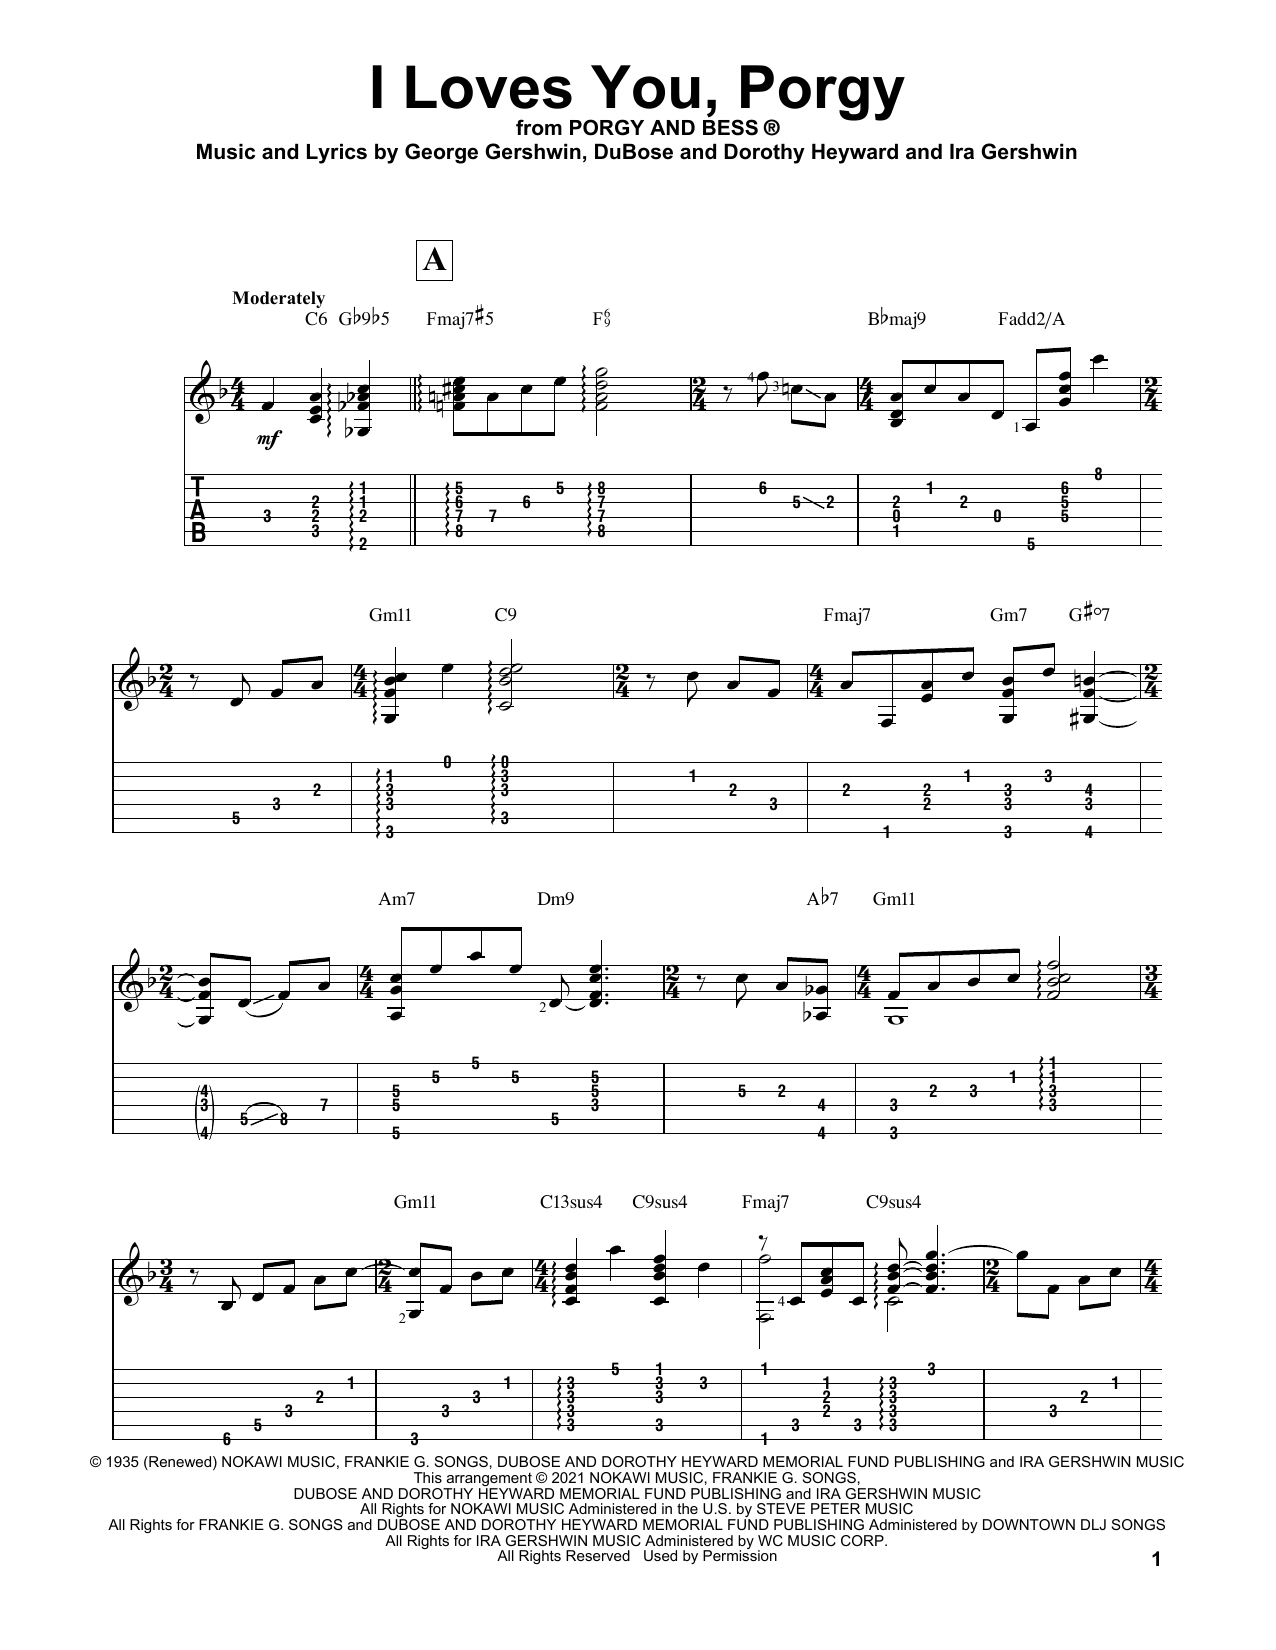 George Gershwin I Loves You, Porgy (arr. Matt Otten) Sheet Music Notes & Chords for Solo Guitar - Download or Print PDF